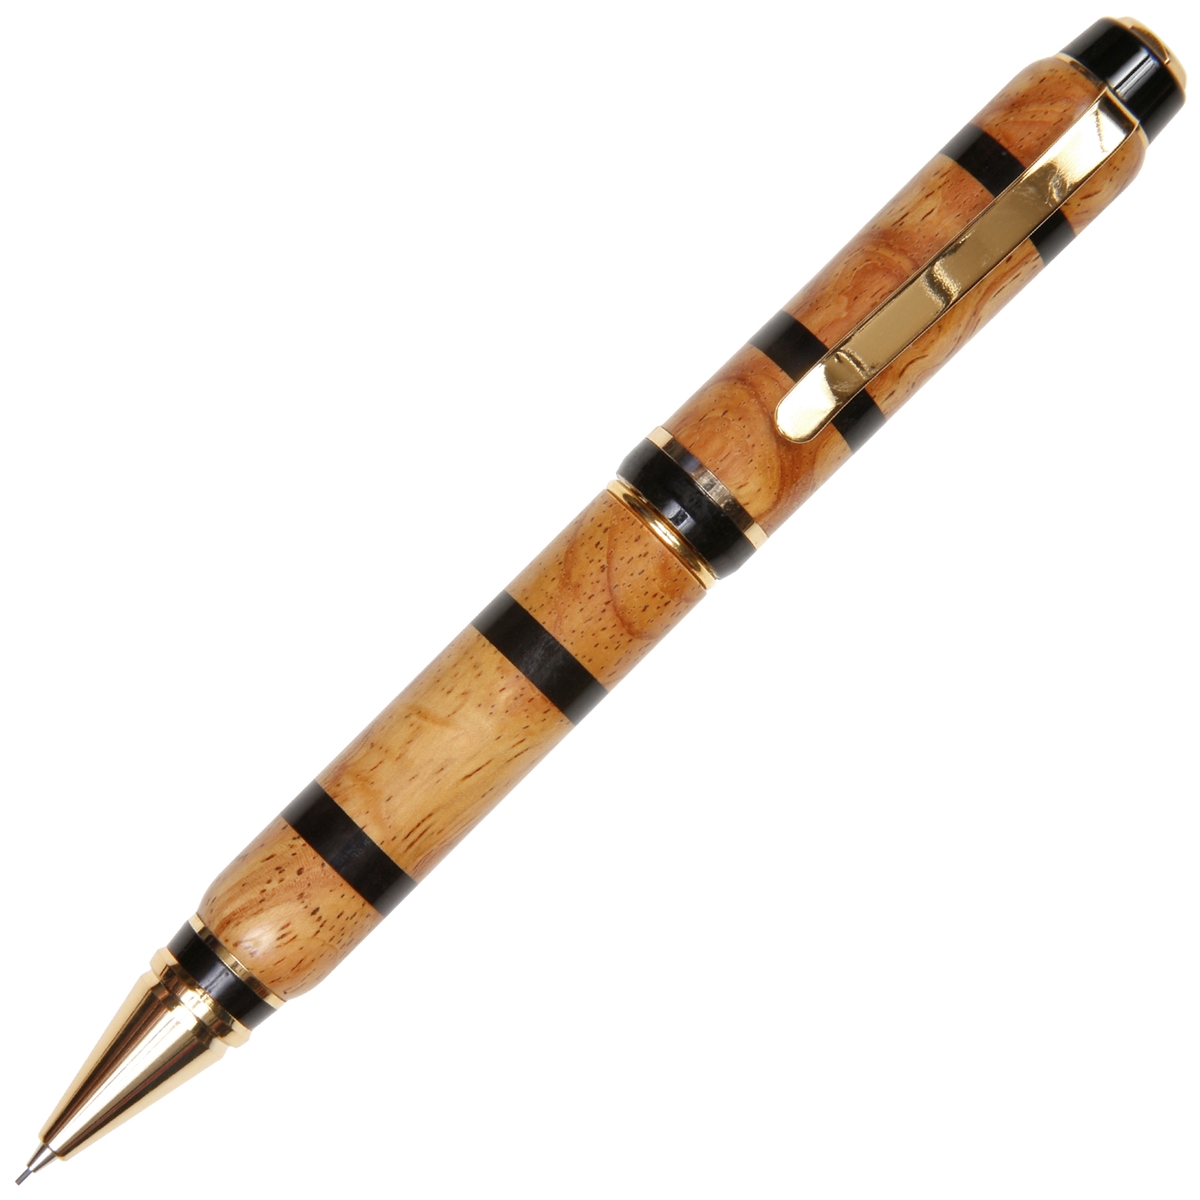 Ambonya Burl with Ebony Inlays Cigar Twist Pencil - Lanier Pens